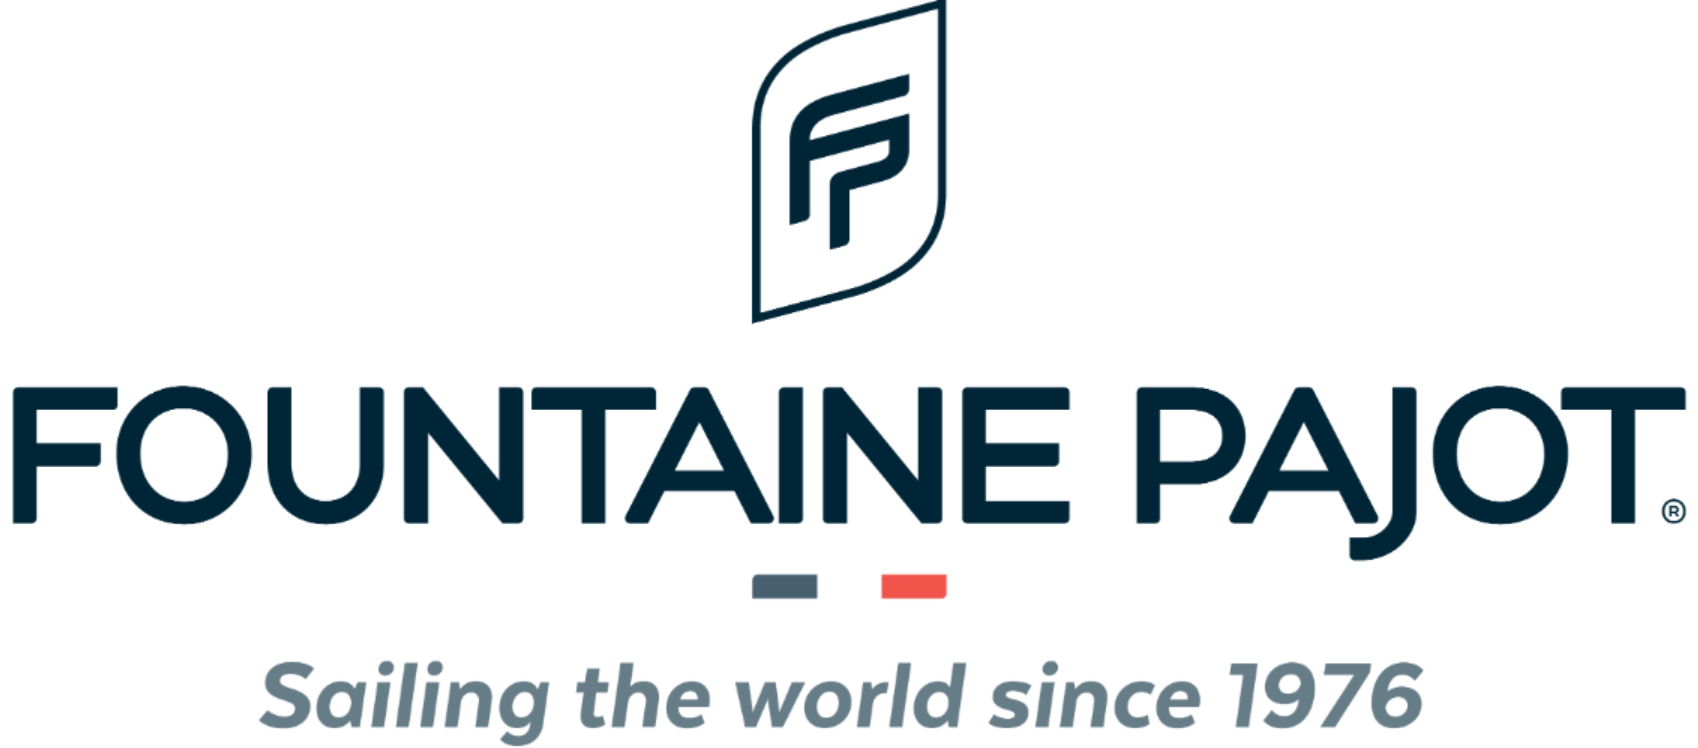 Fountaine Pajot brand logo